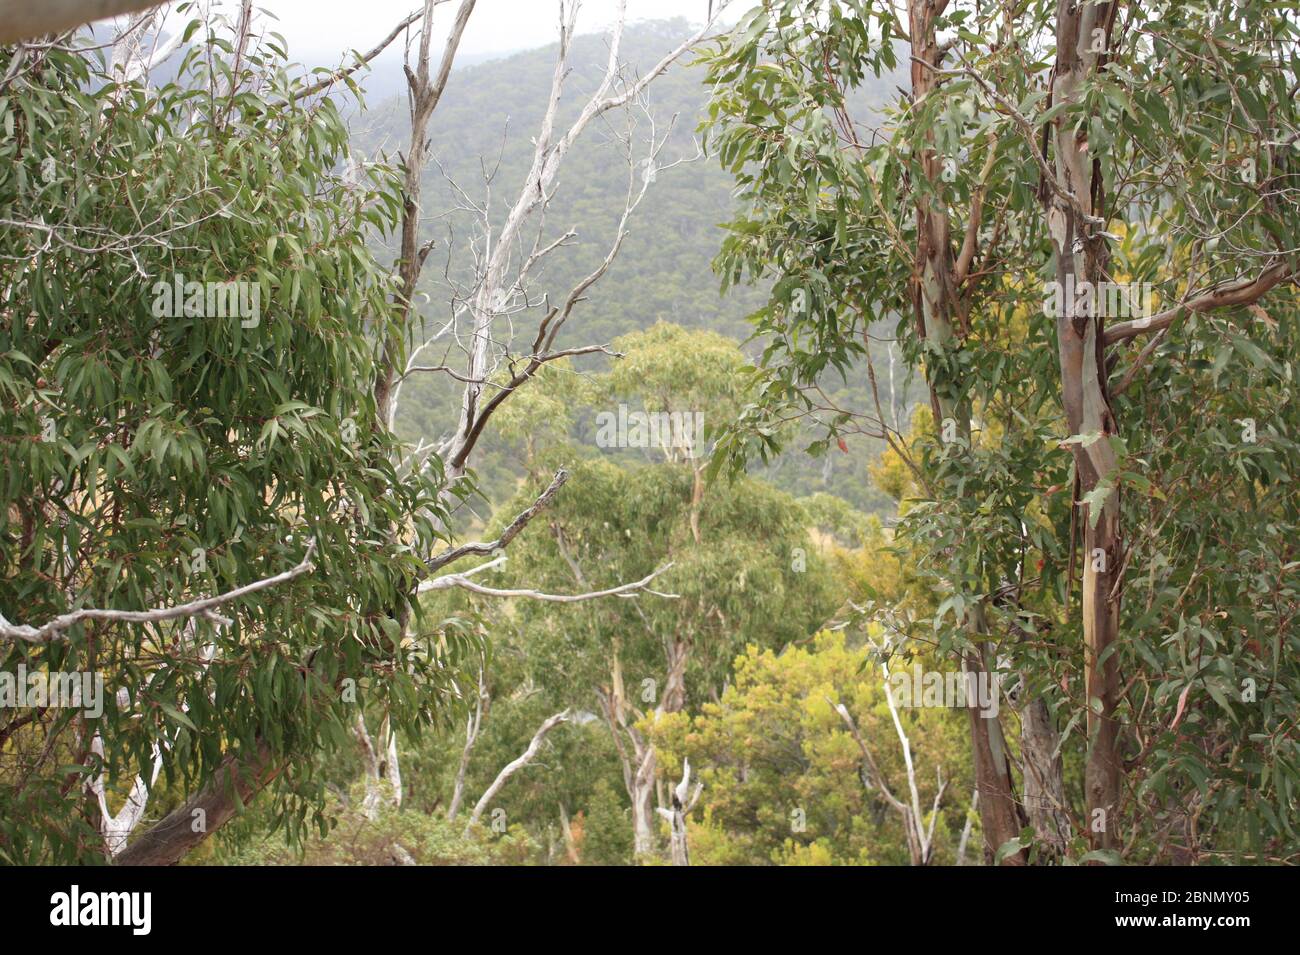 Native Australian bushland near Lorne along the Great Ocean Road in Victoria, Australia. Stock Photo